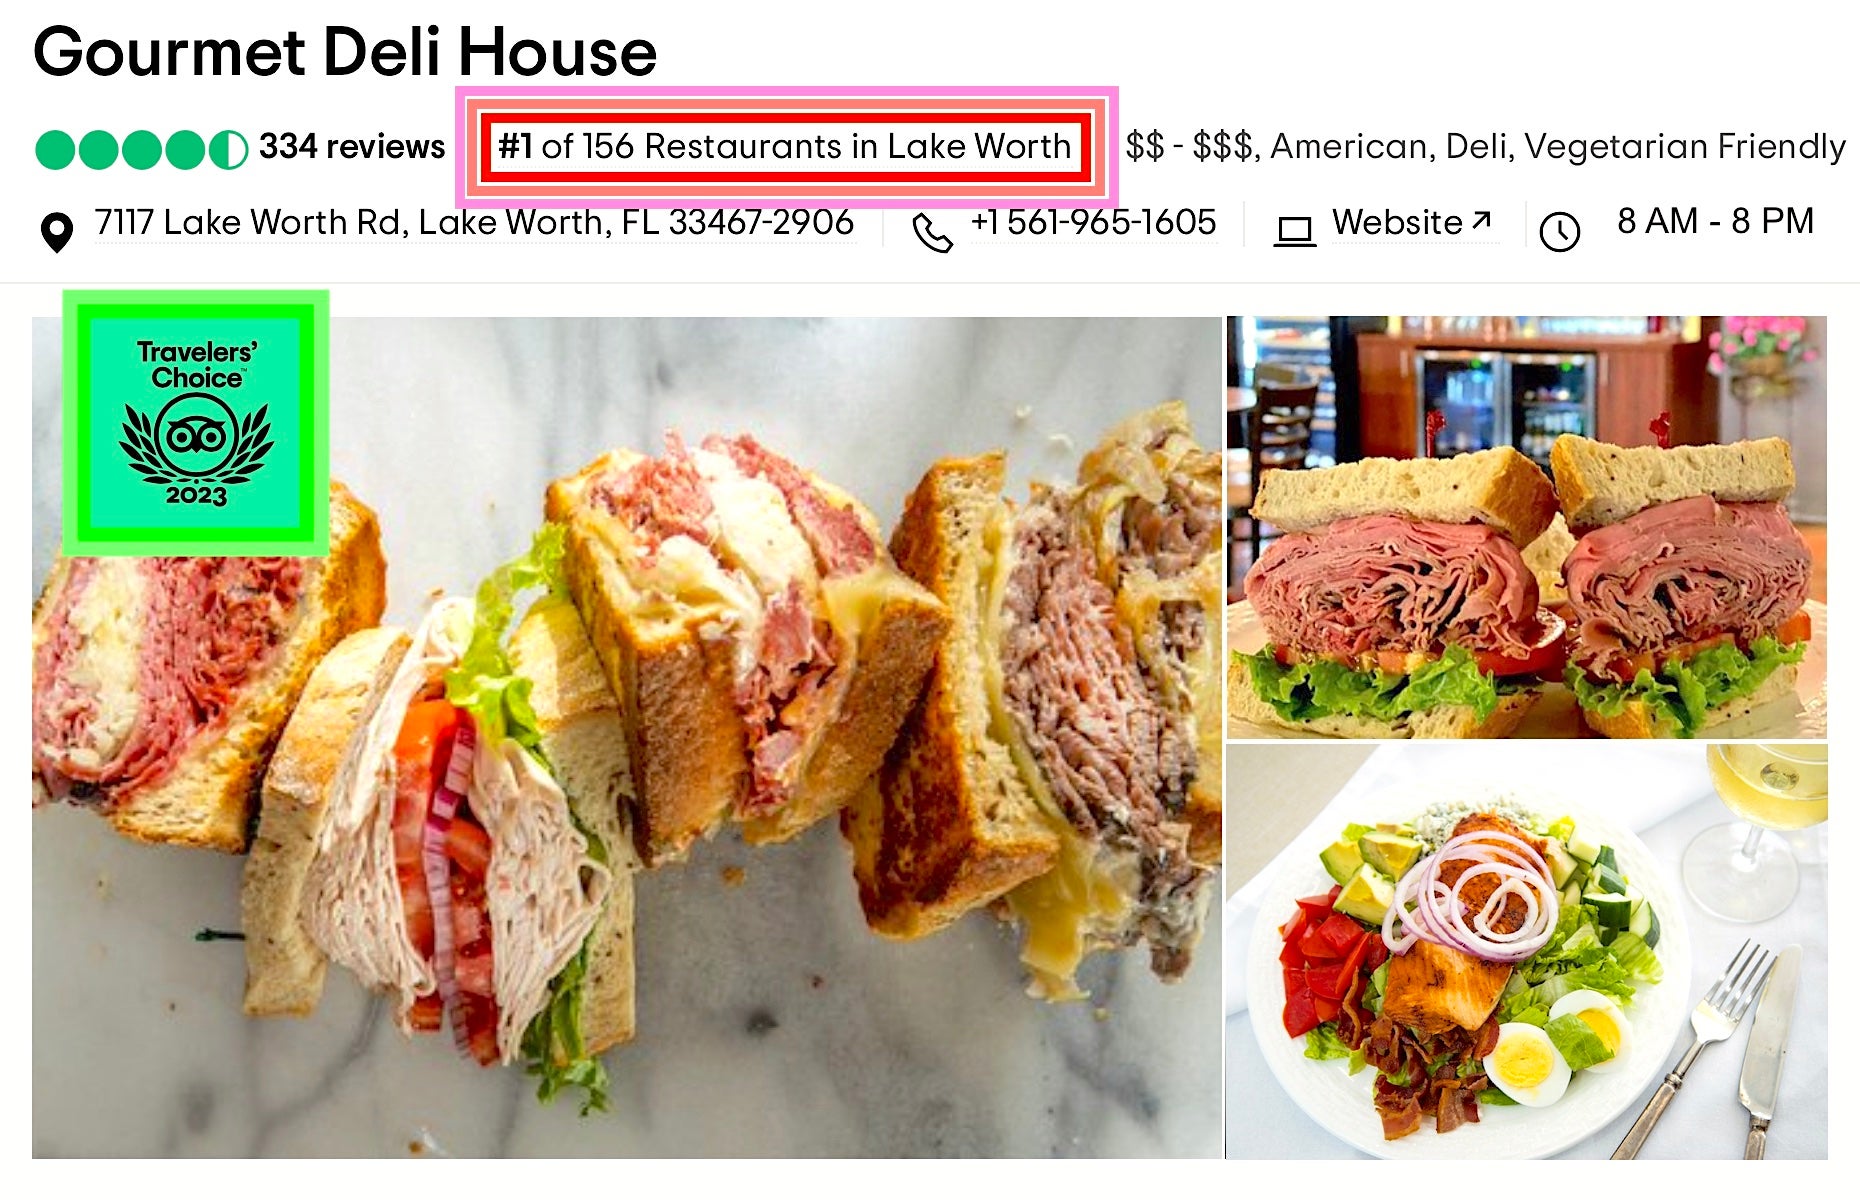 DENNY'S, Miami Beach - Restaurant Reviews, Photos & Phone Number -  Tripadvisor